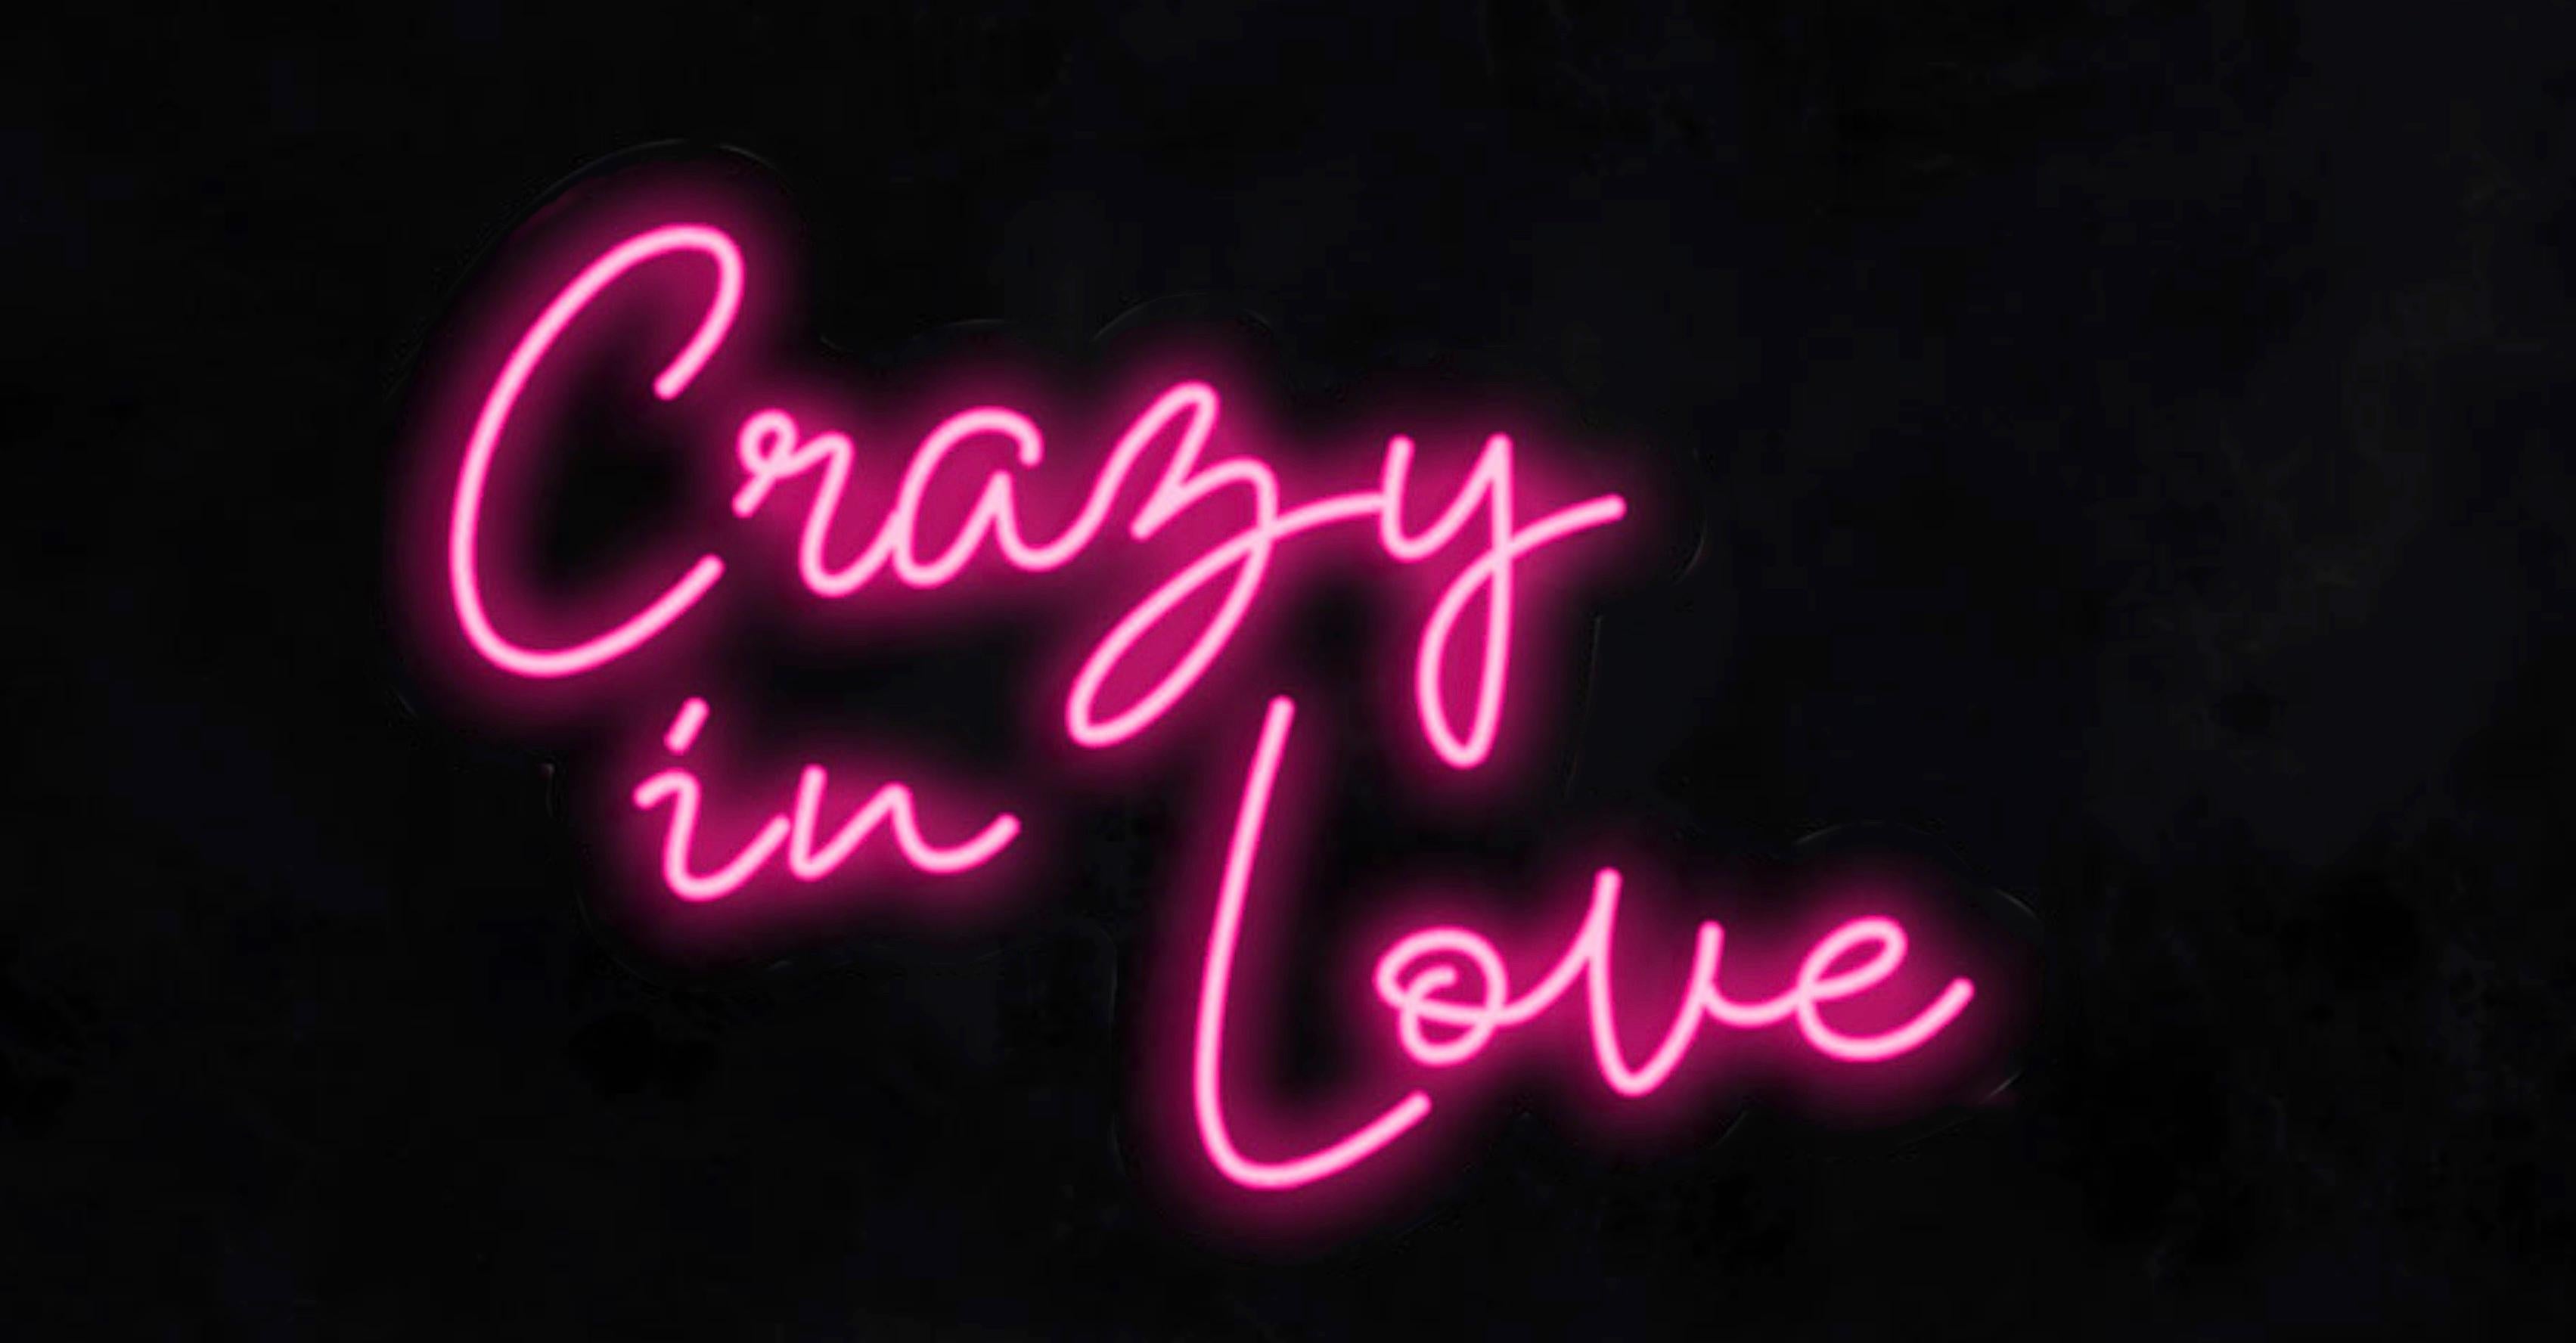 crazy in love – neonfarbene Kunstwerke